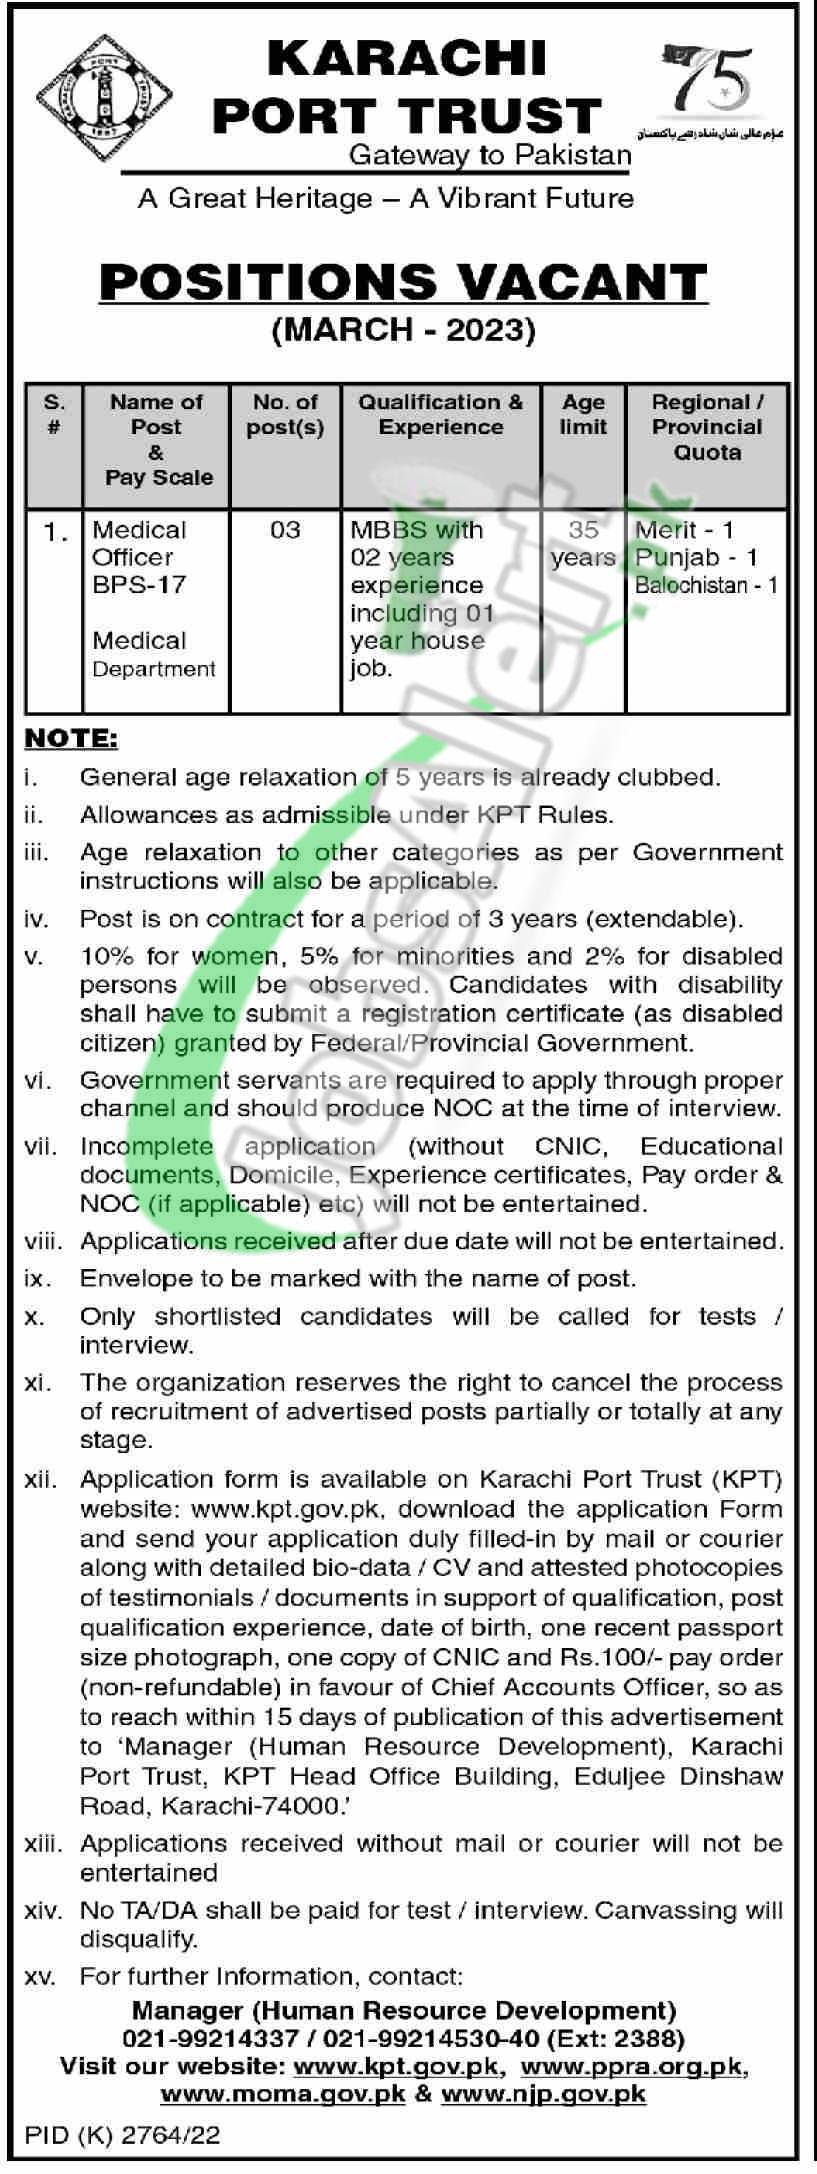 Karachi Port Trust Jobs April 2023 Professionals Required Career Opportunities